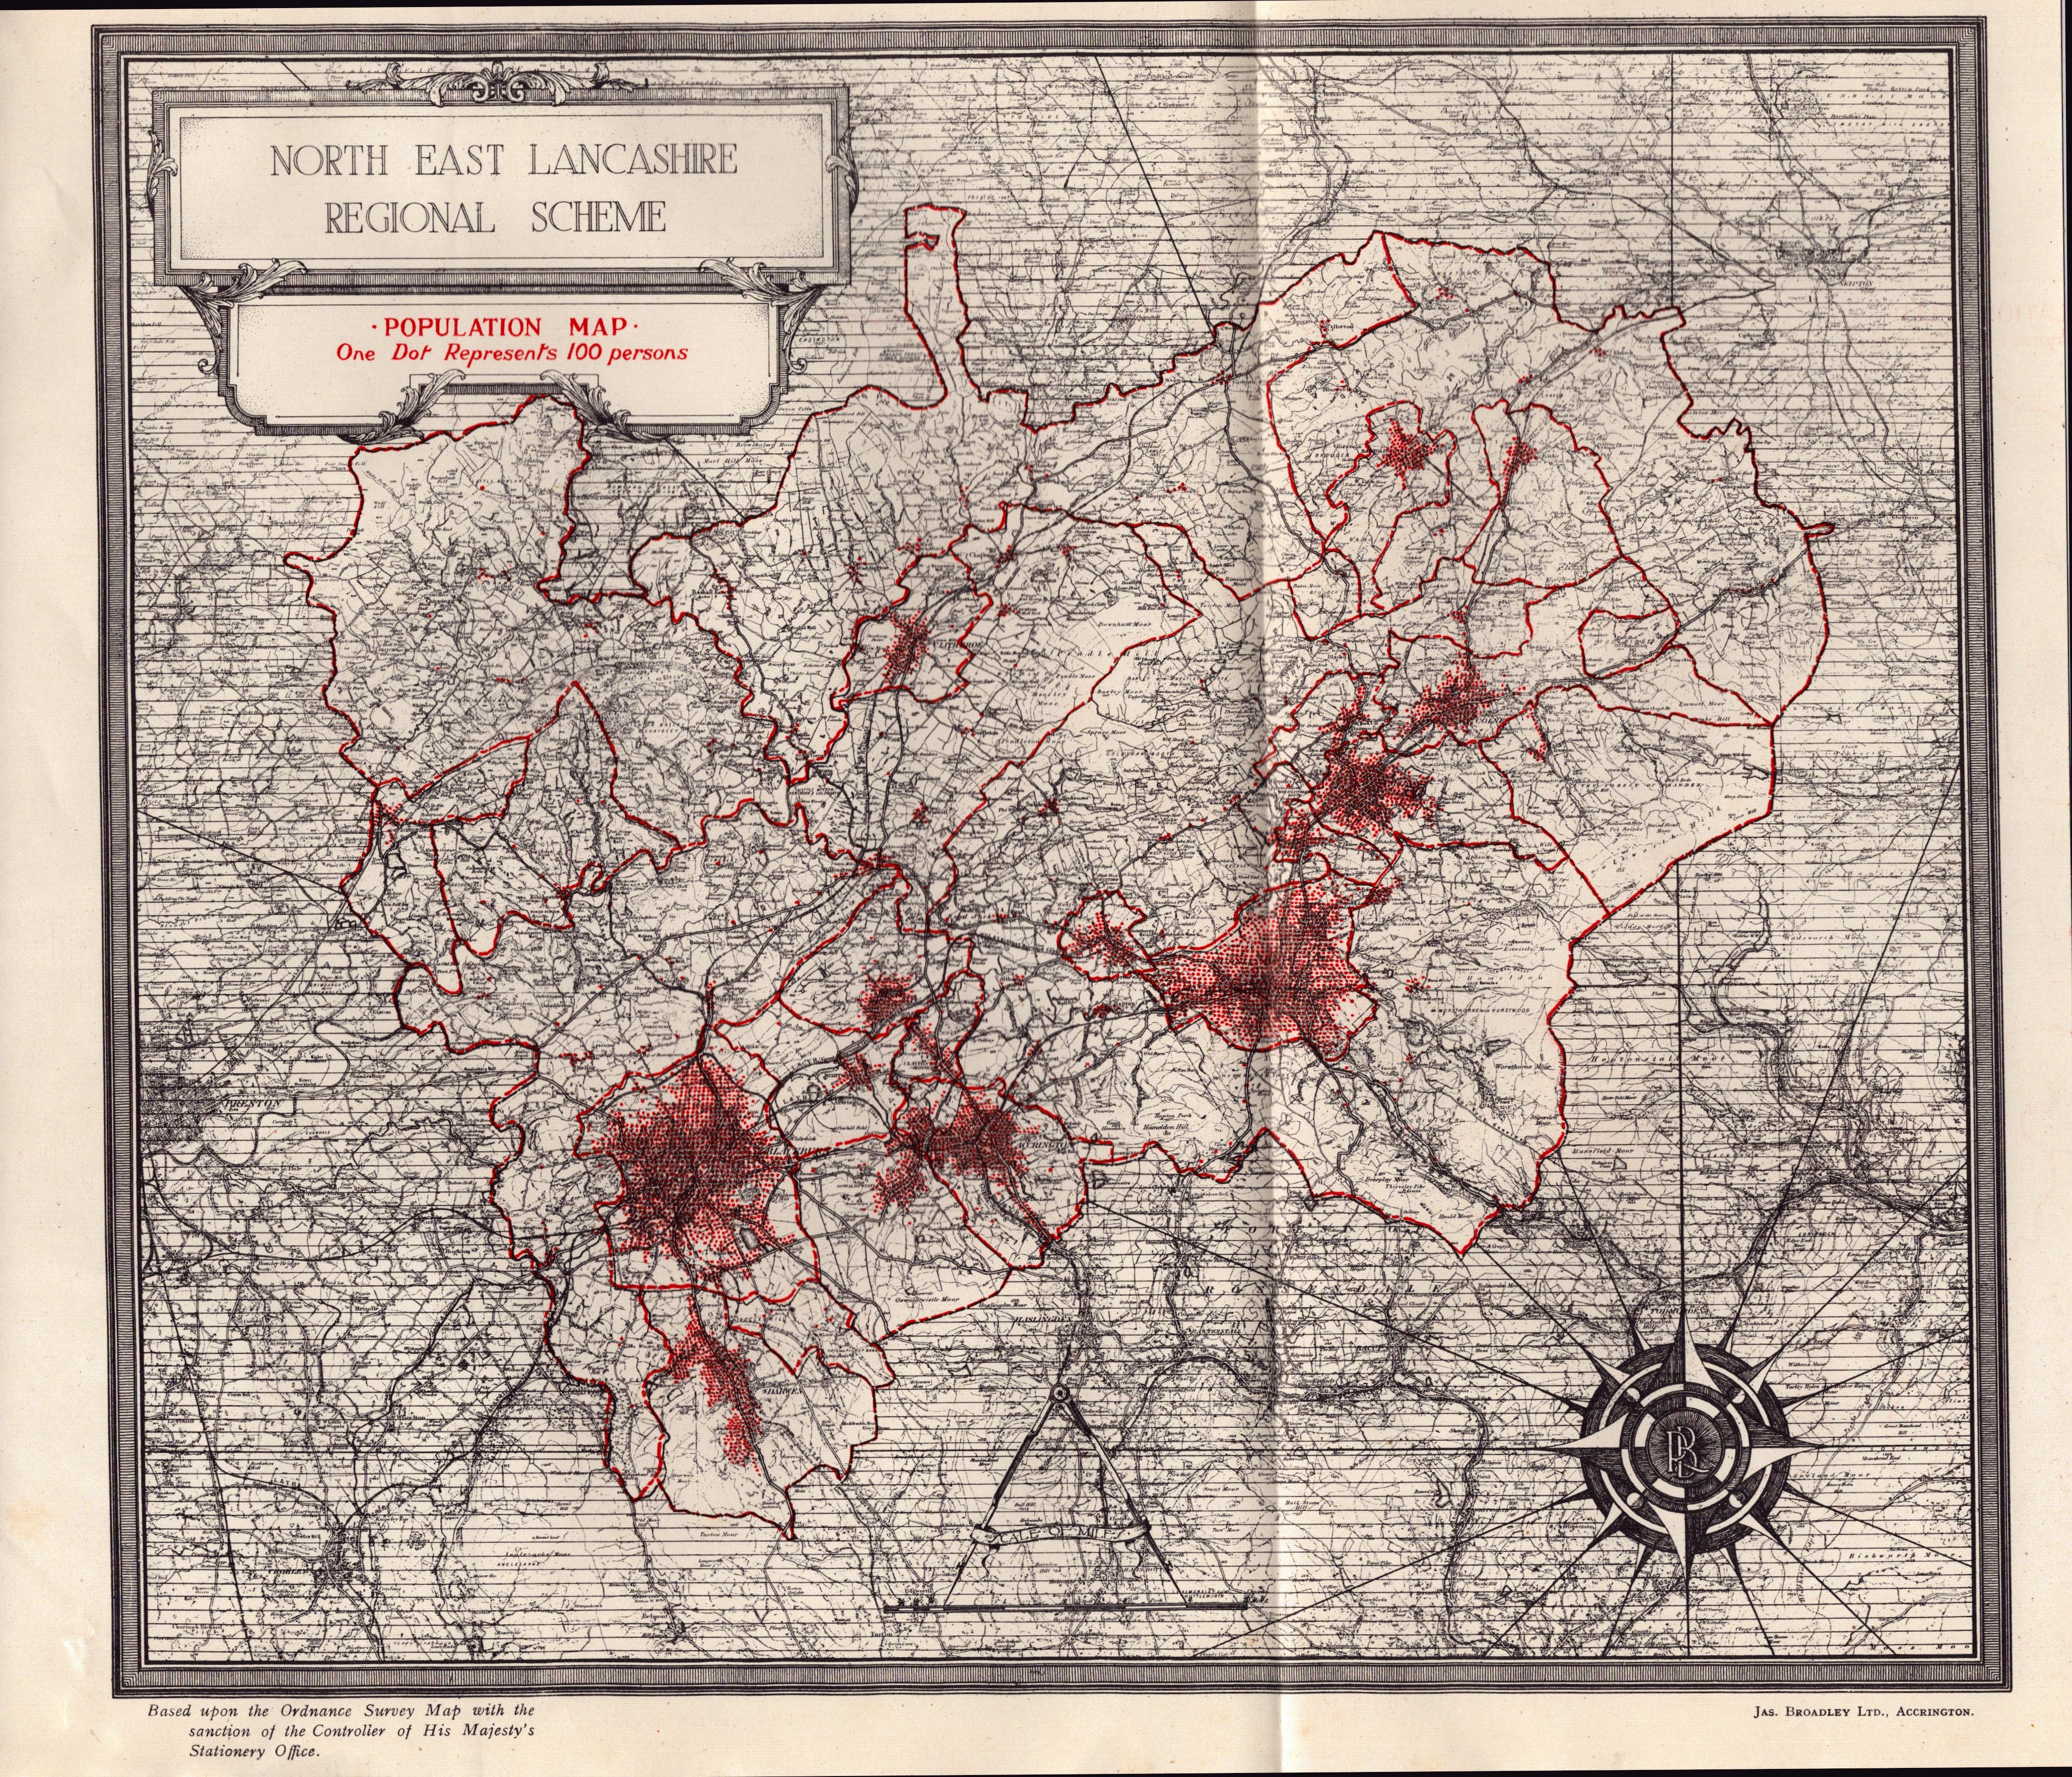 North-East Lancashire 1929 Regional Scheme Report-Population Map.